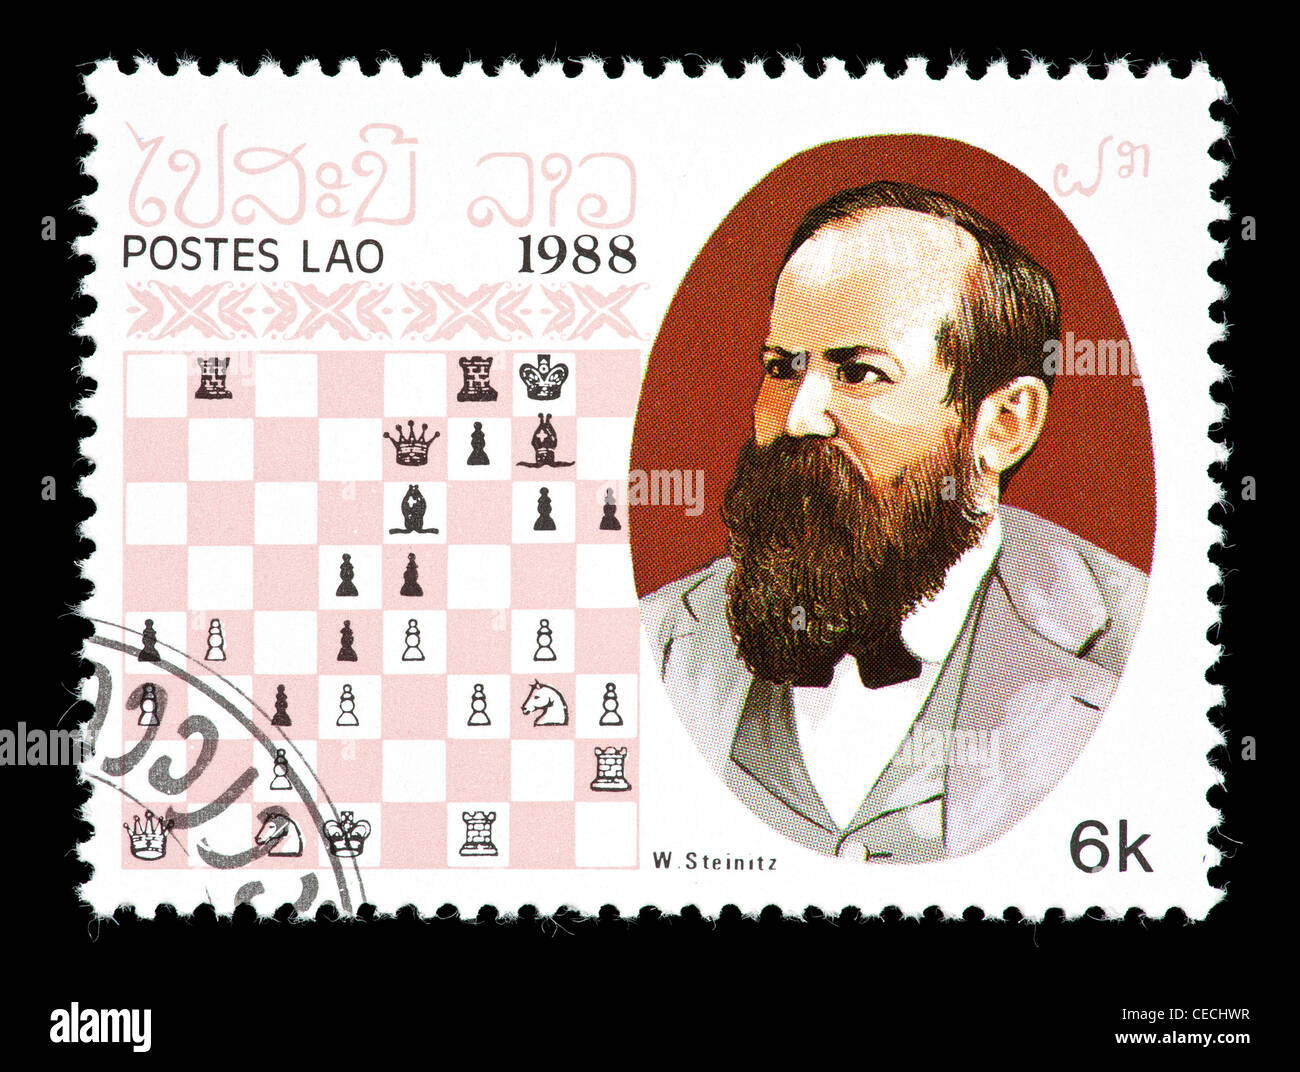 Postage stamp from Laos depicting Wilhelm Steinitz, former world chess champion. Stock Photo